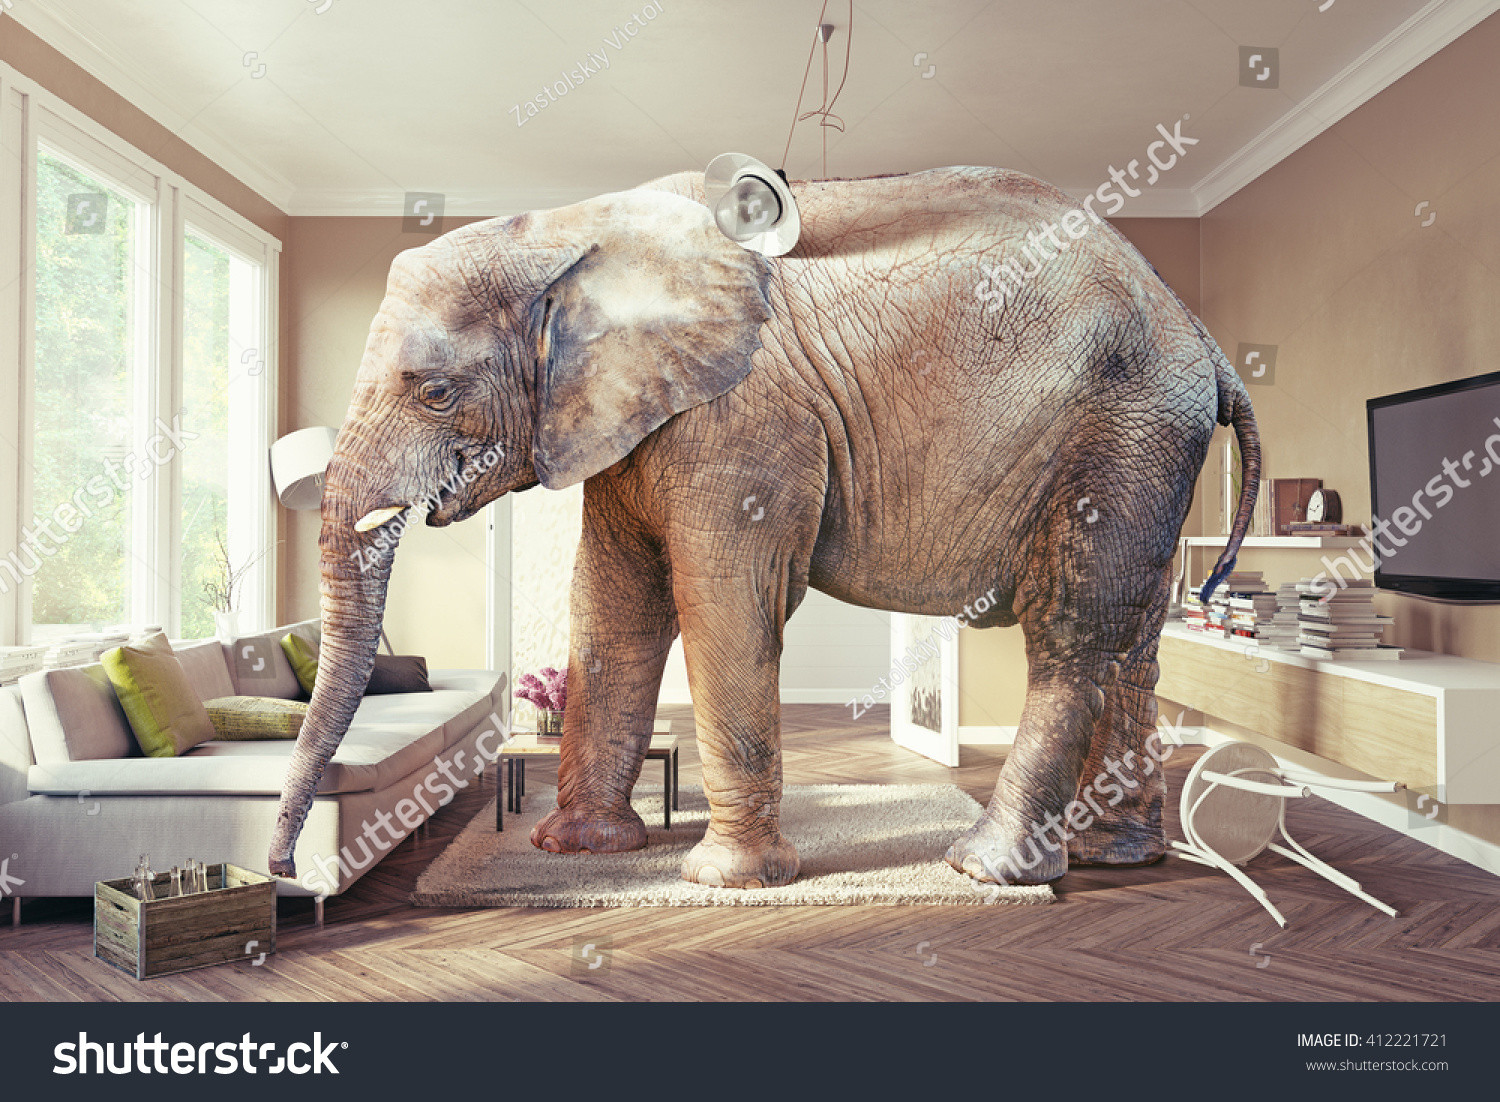 Elephant Decor For Living Room
 The Elephant In The Living Room – Modern House